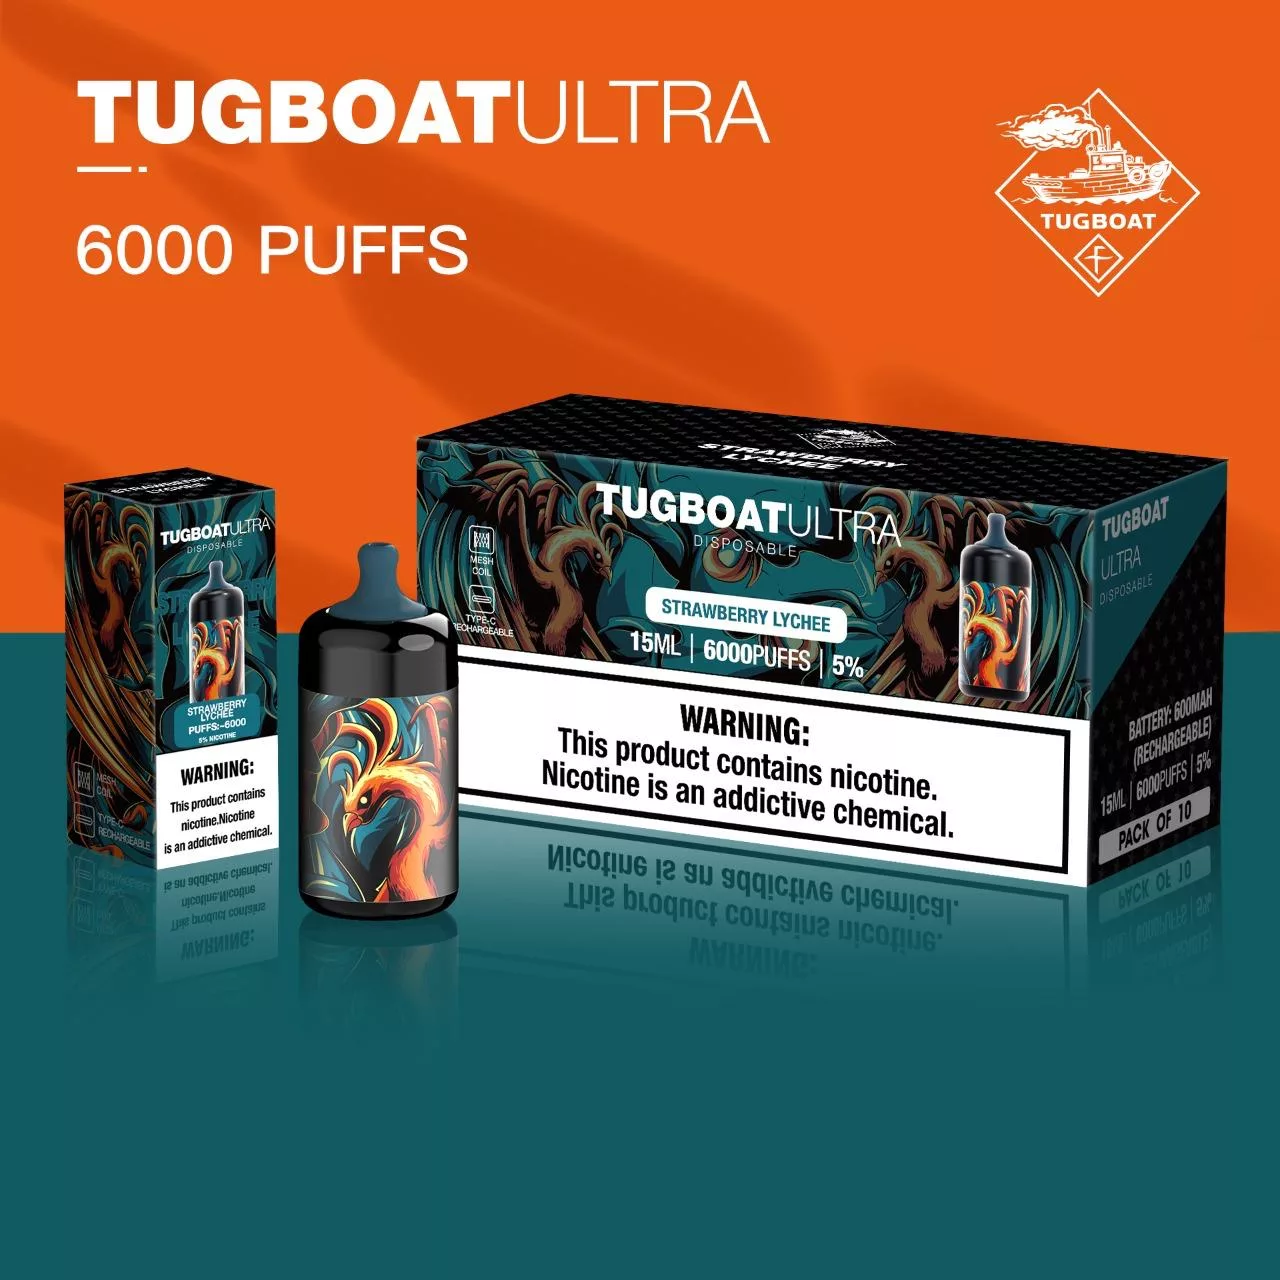 Tugboat Ultra 6000 puffs